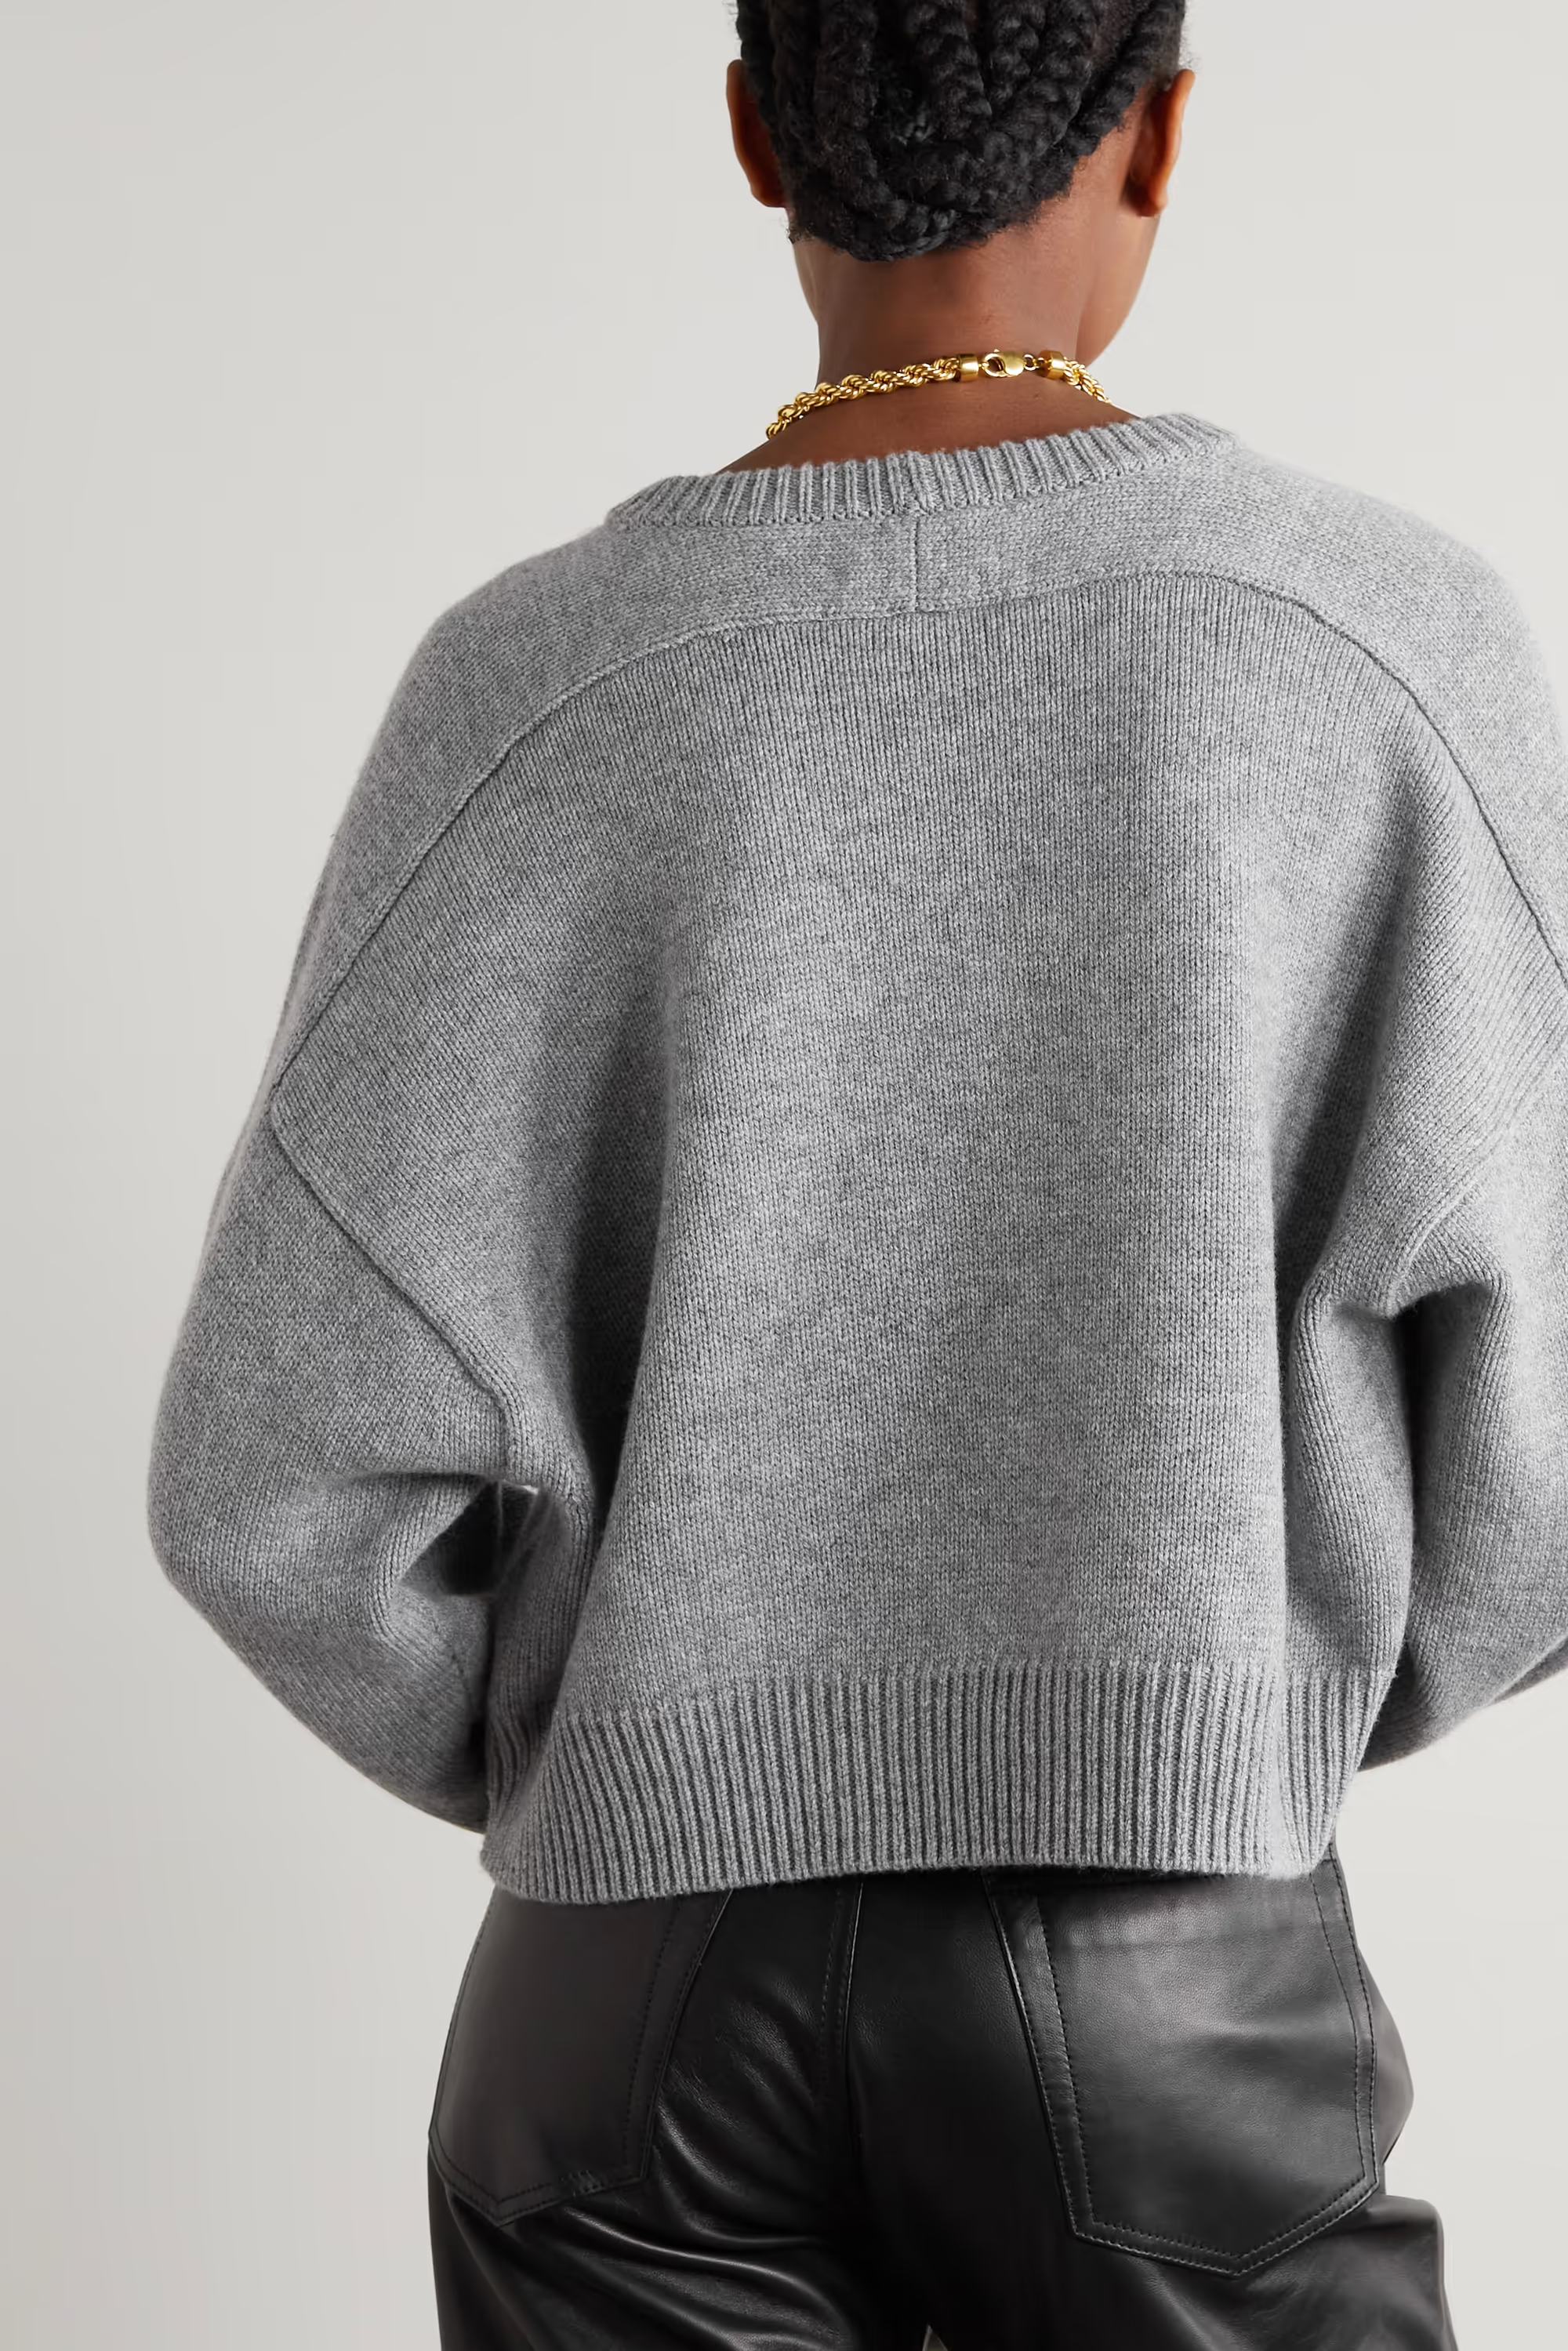 Loulou Studio Sweater - Buy and Slay